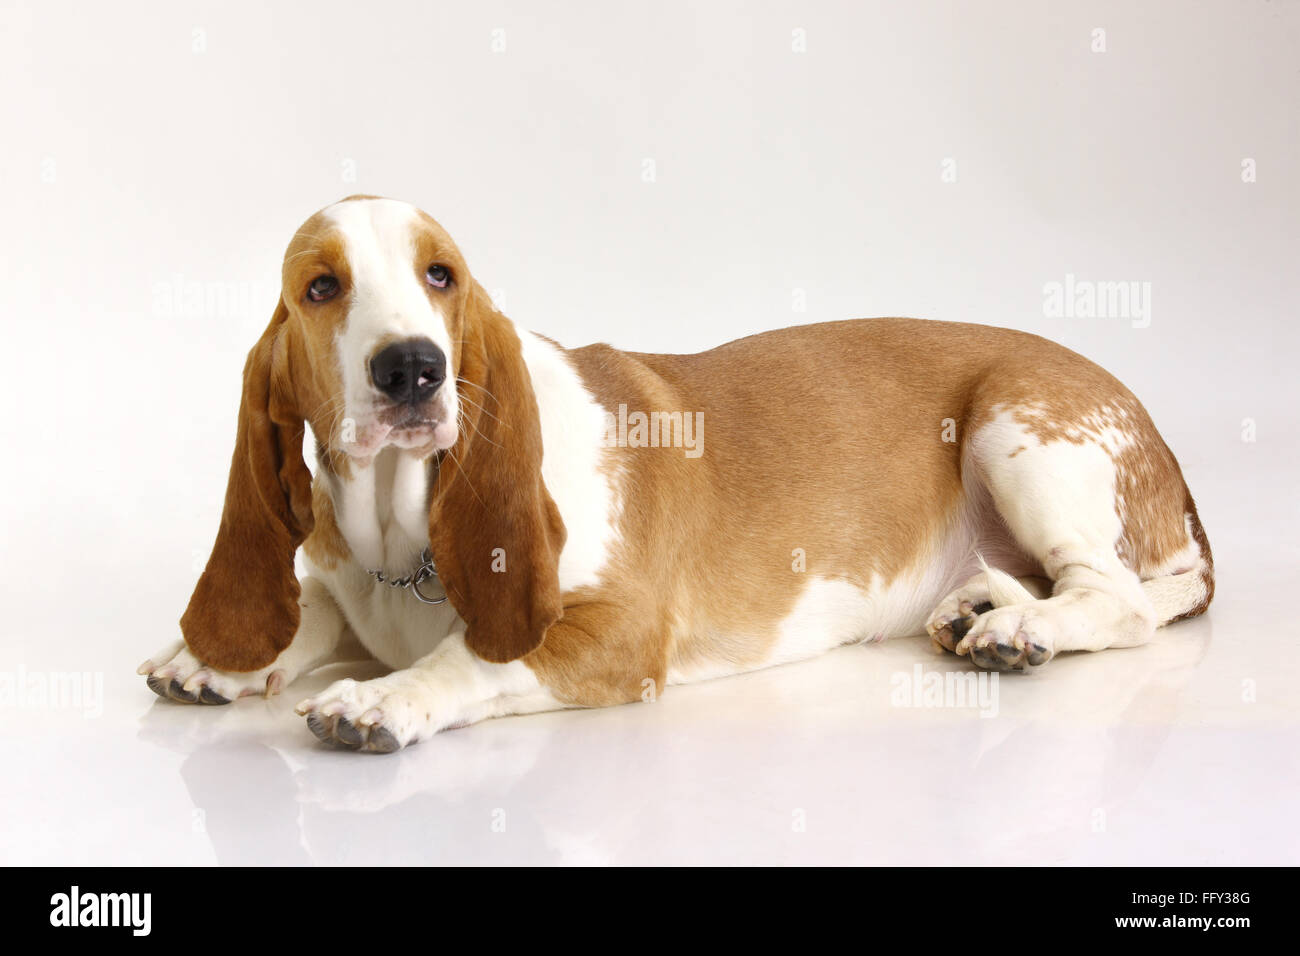 Basset Hound Dog femme posant sur fond blanc Banque D'Images